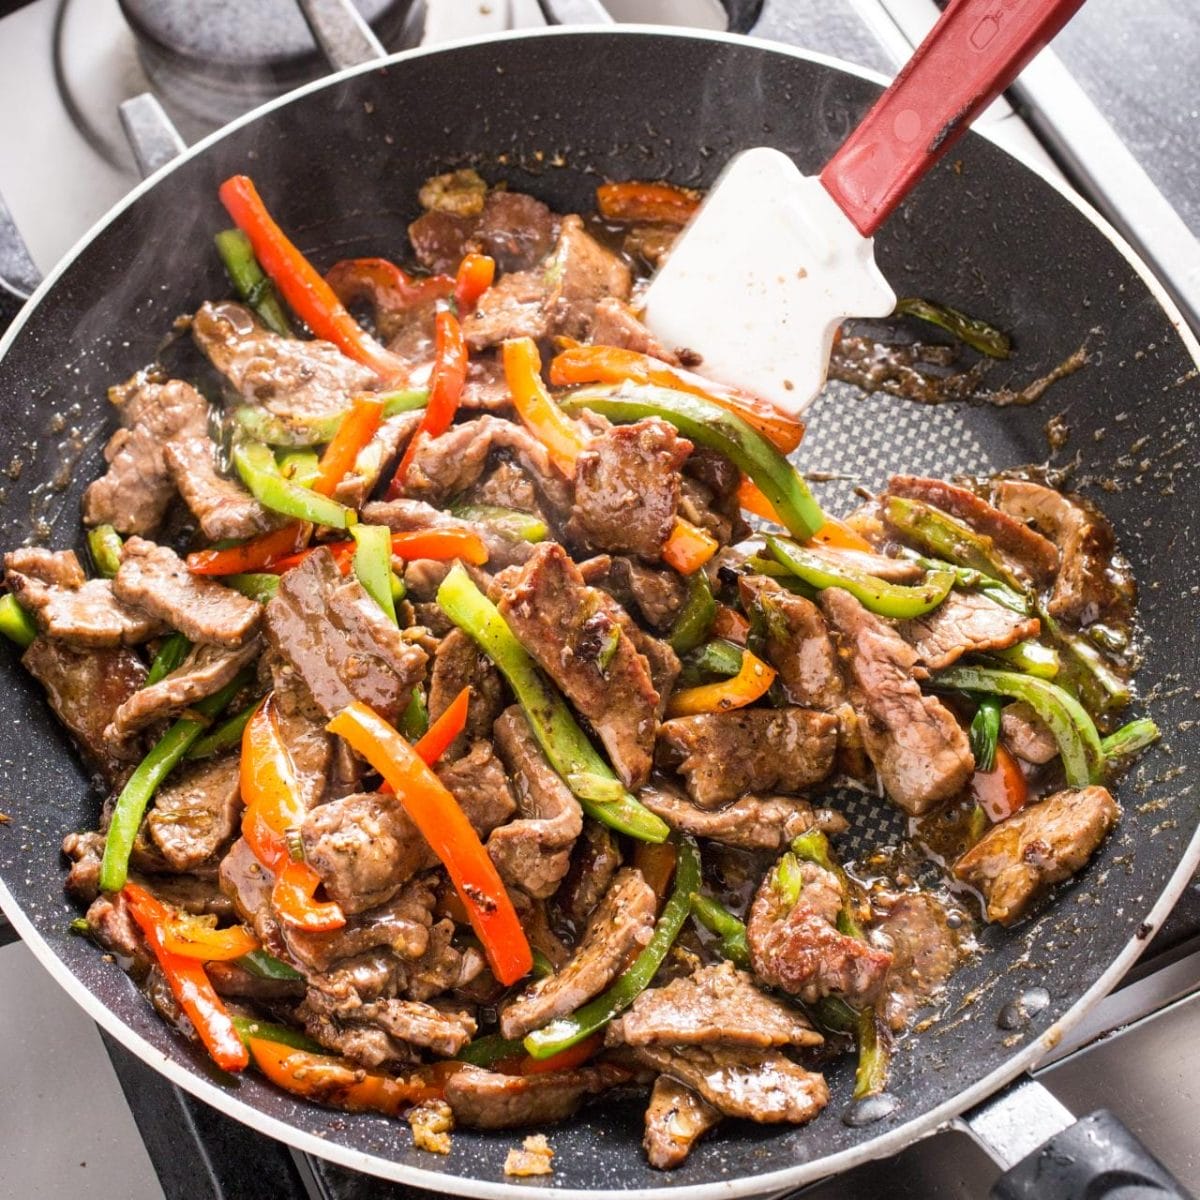 Chinese Pepper Steak